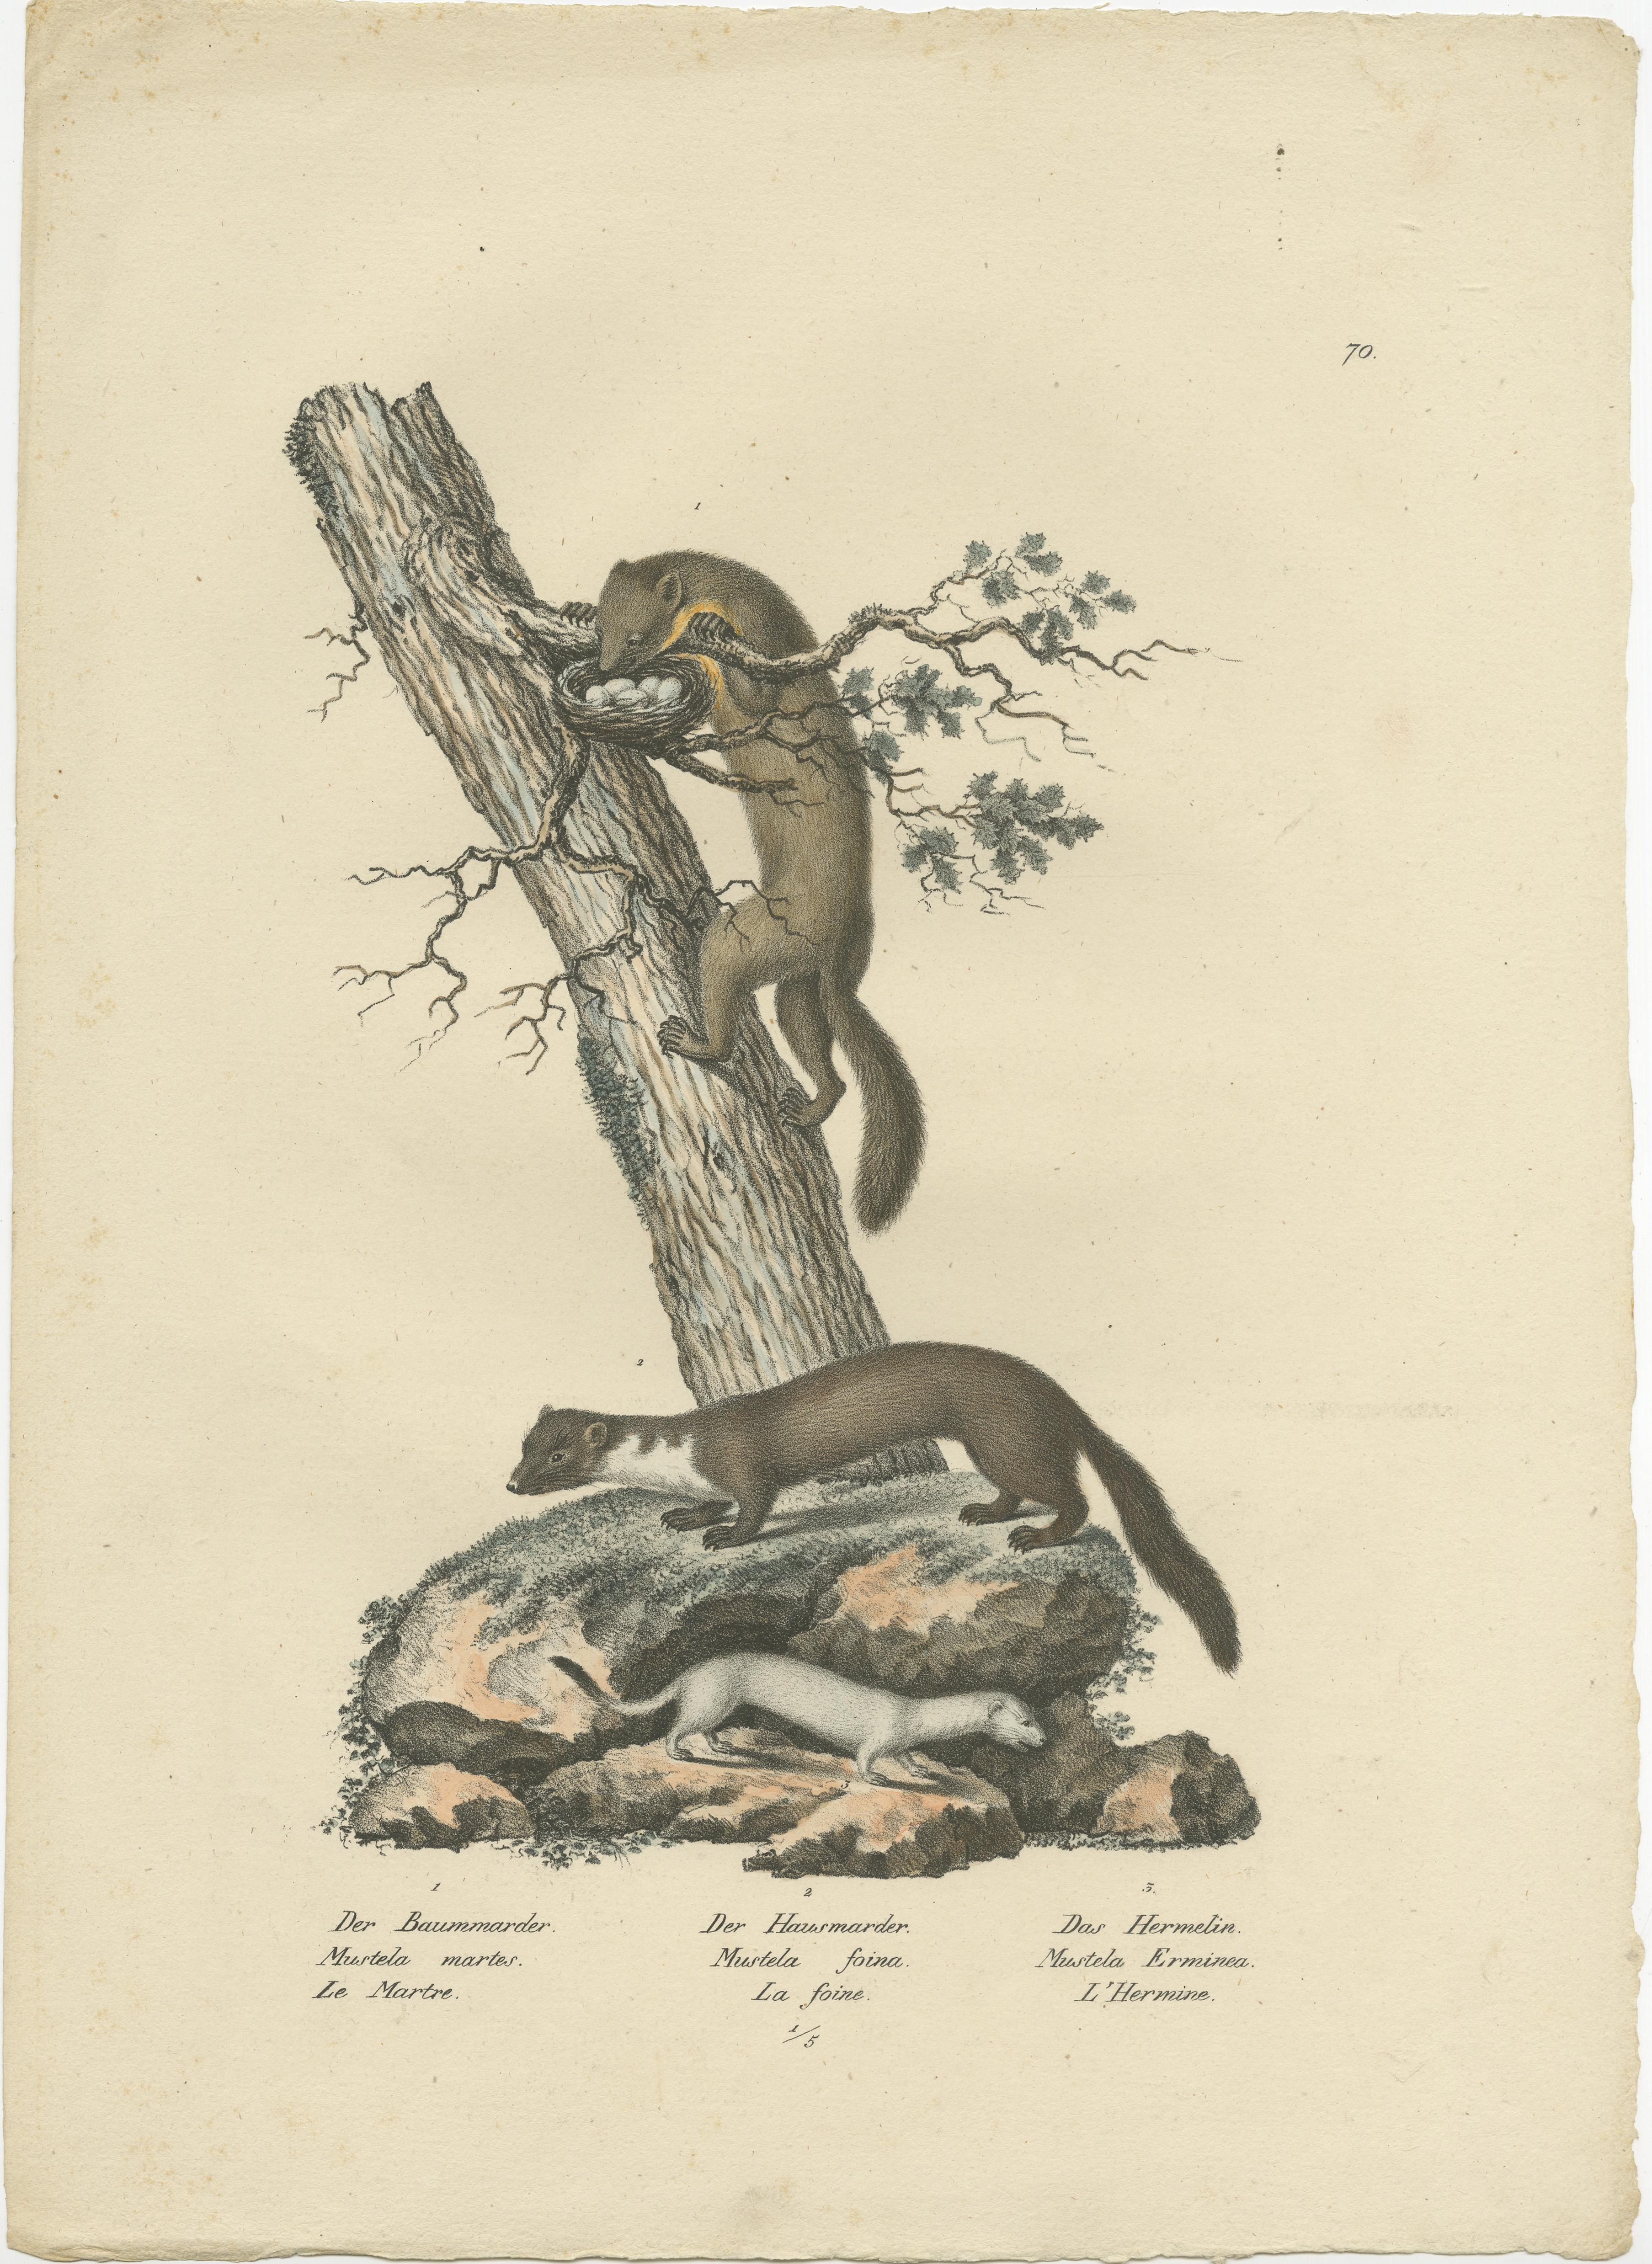 Antique print titled 'Mustela martes, Foina, Erminea'. Original old print of a pine marten, mink and ermine. Published by Karl Joseph Brodtmann, 1827.